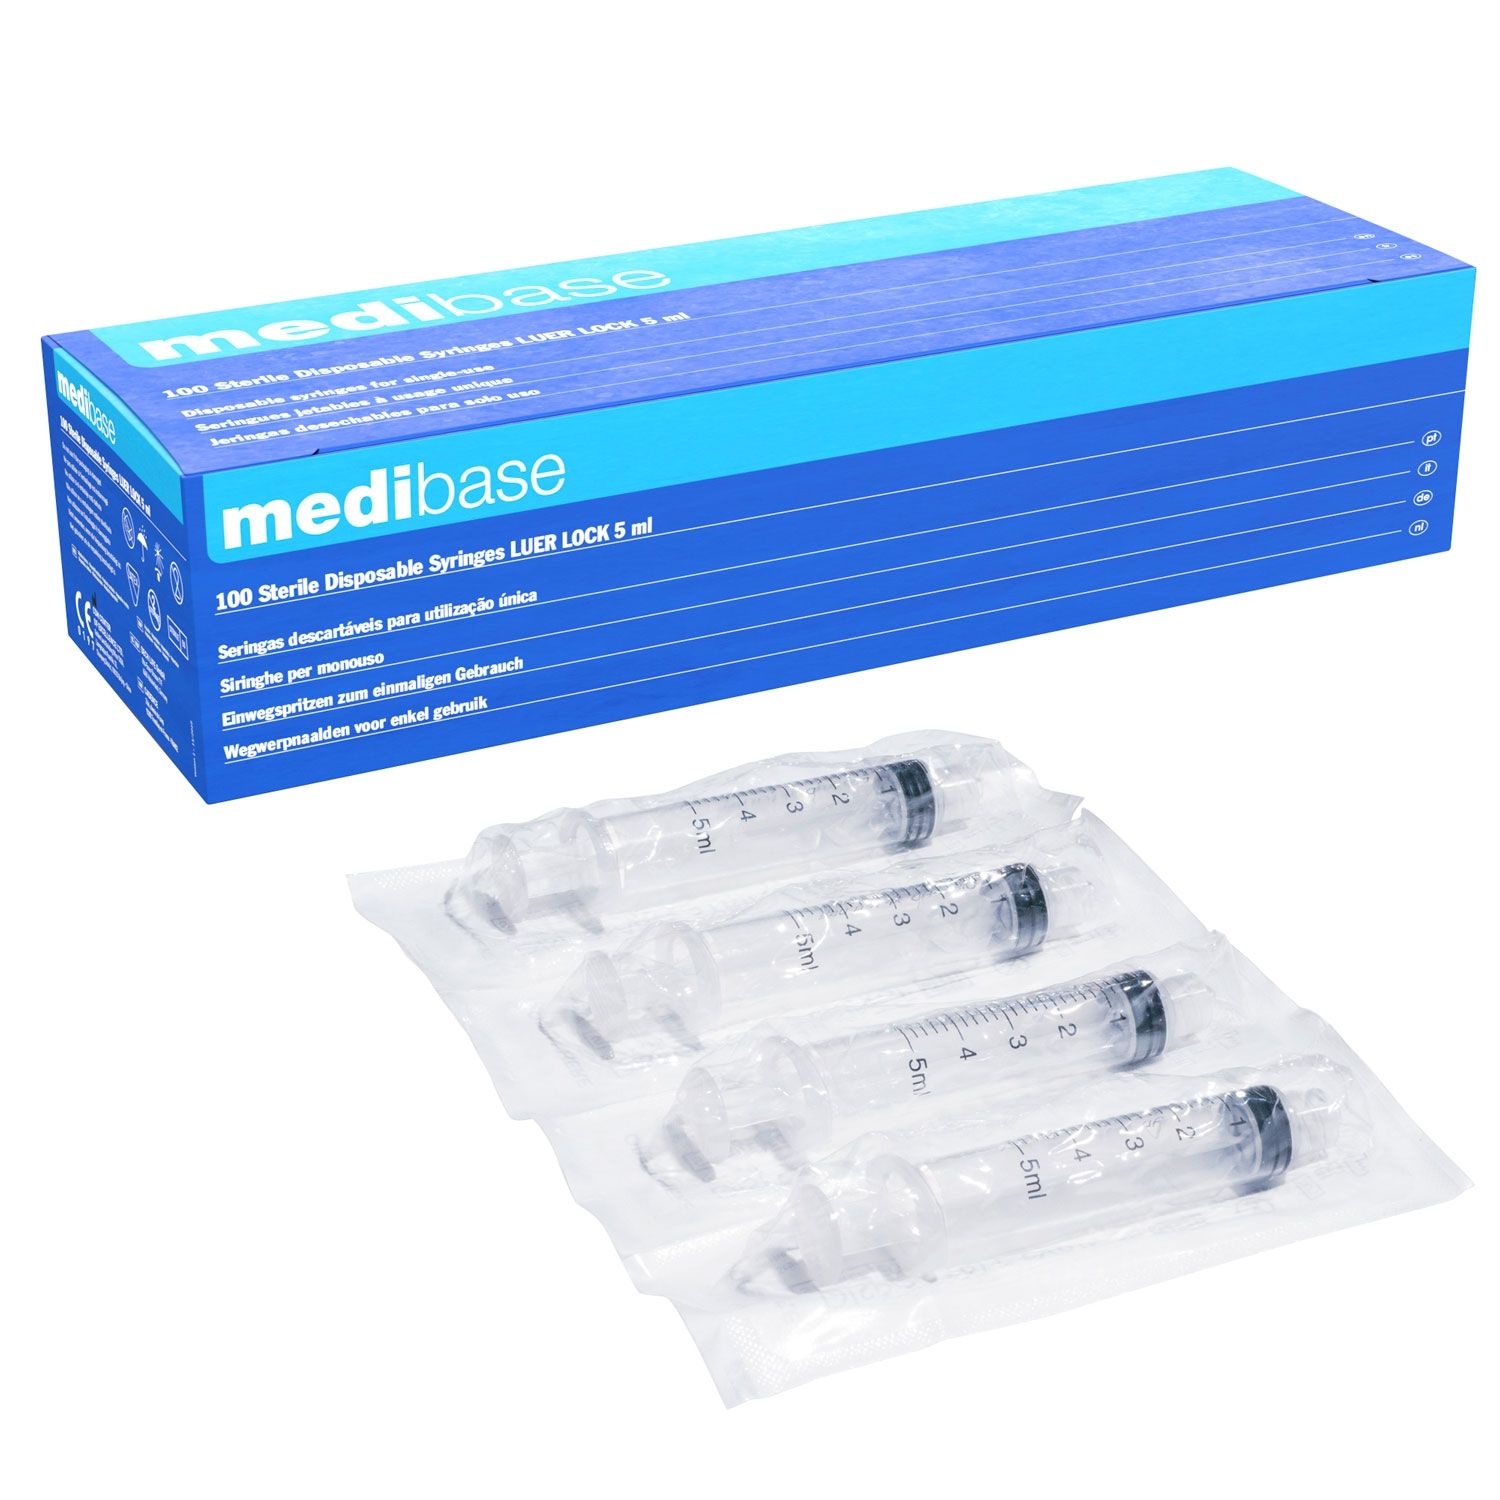 参比制剂,进口原料药,医药原料药 Medibase Sterile Syringes: Luer Lock - 5ml (100)